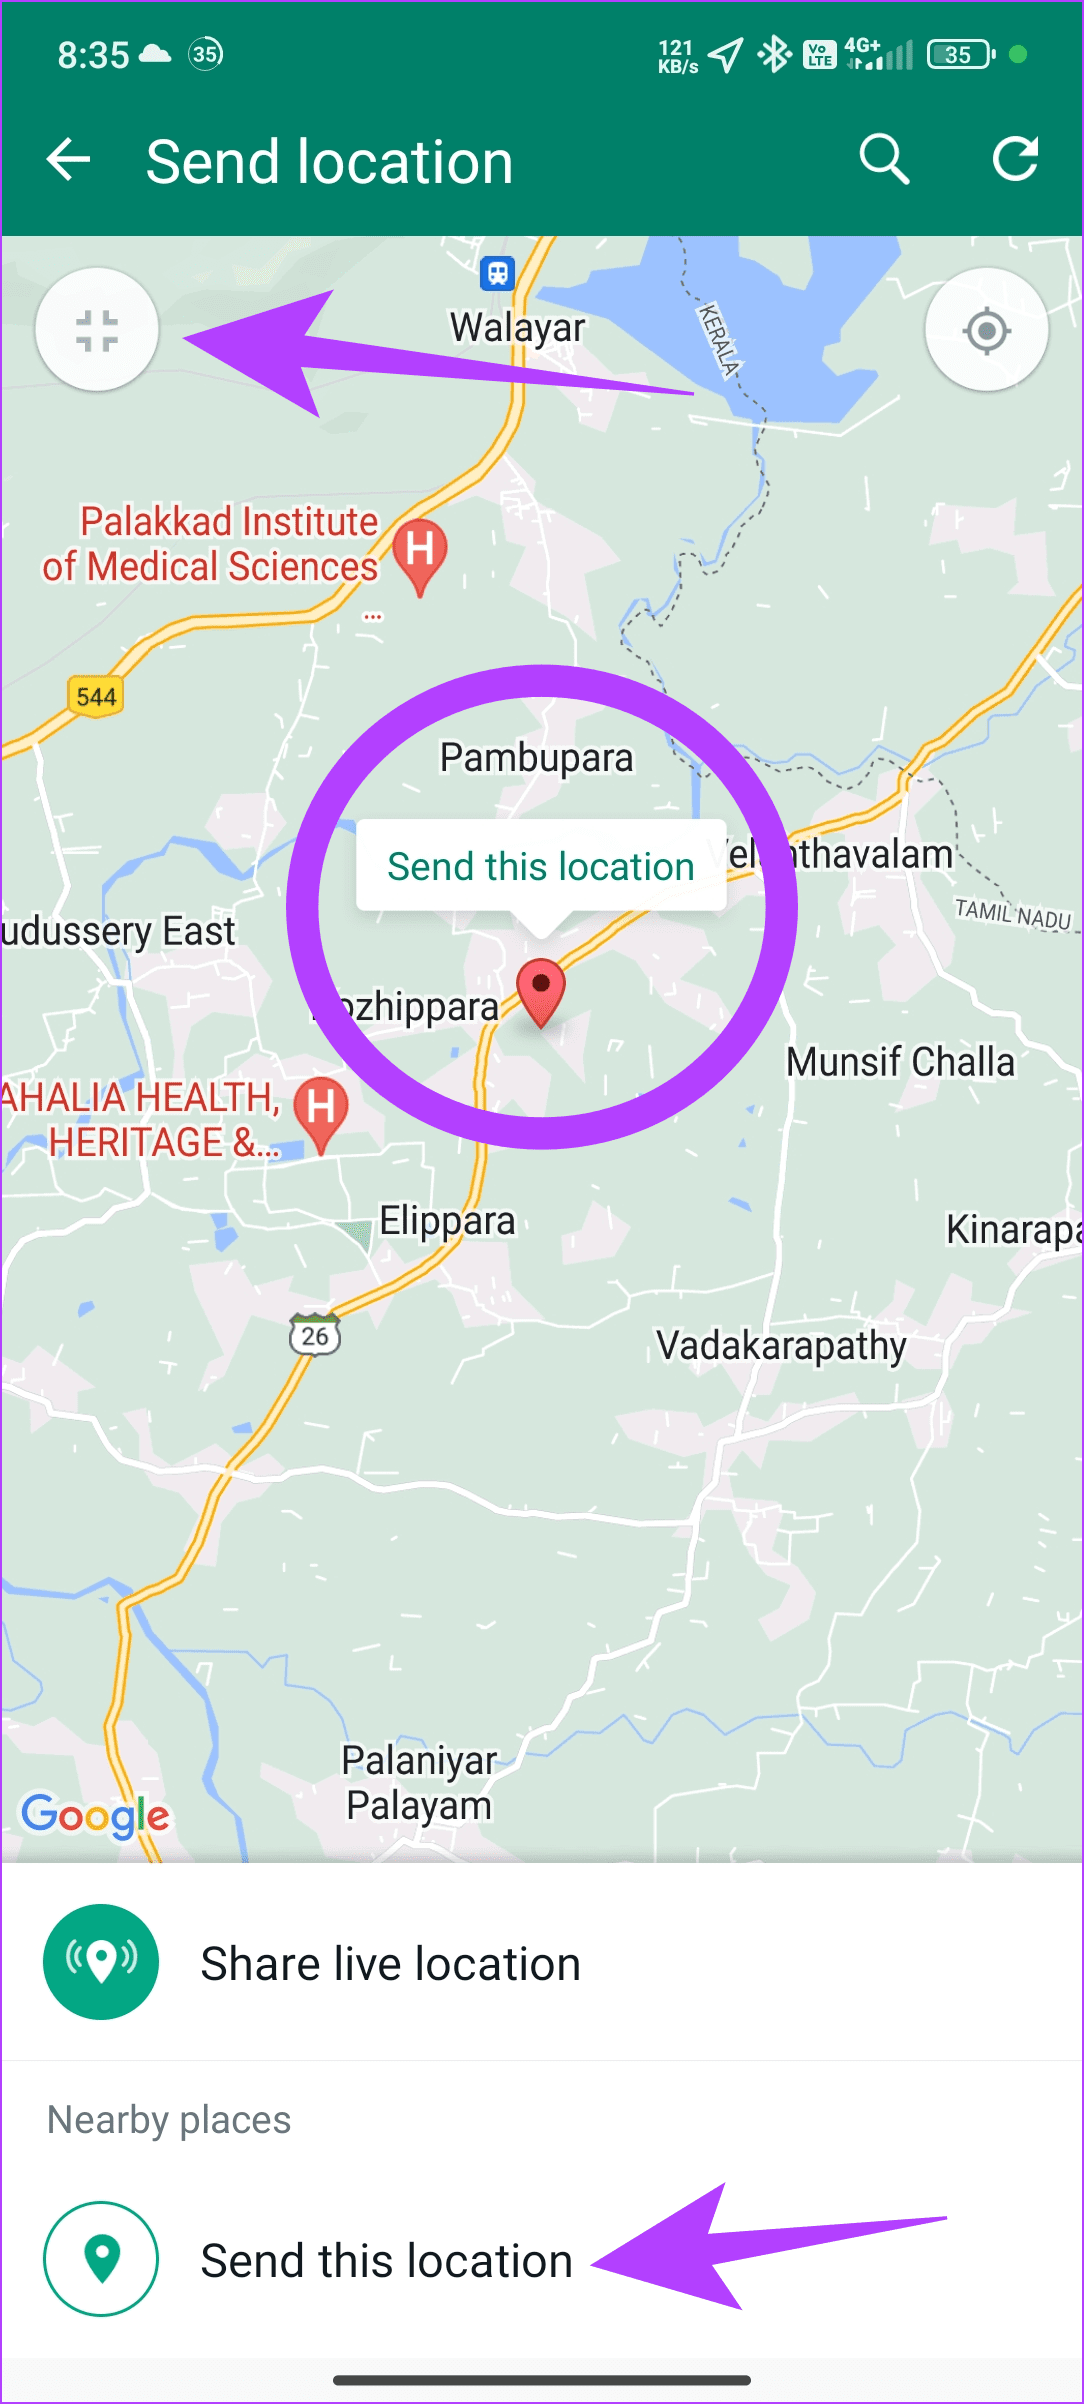 Choose Send location